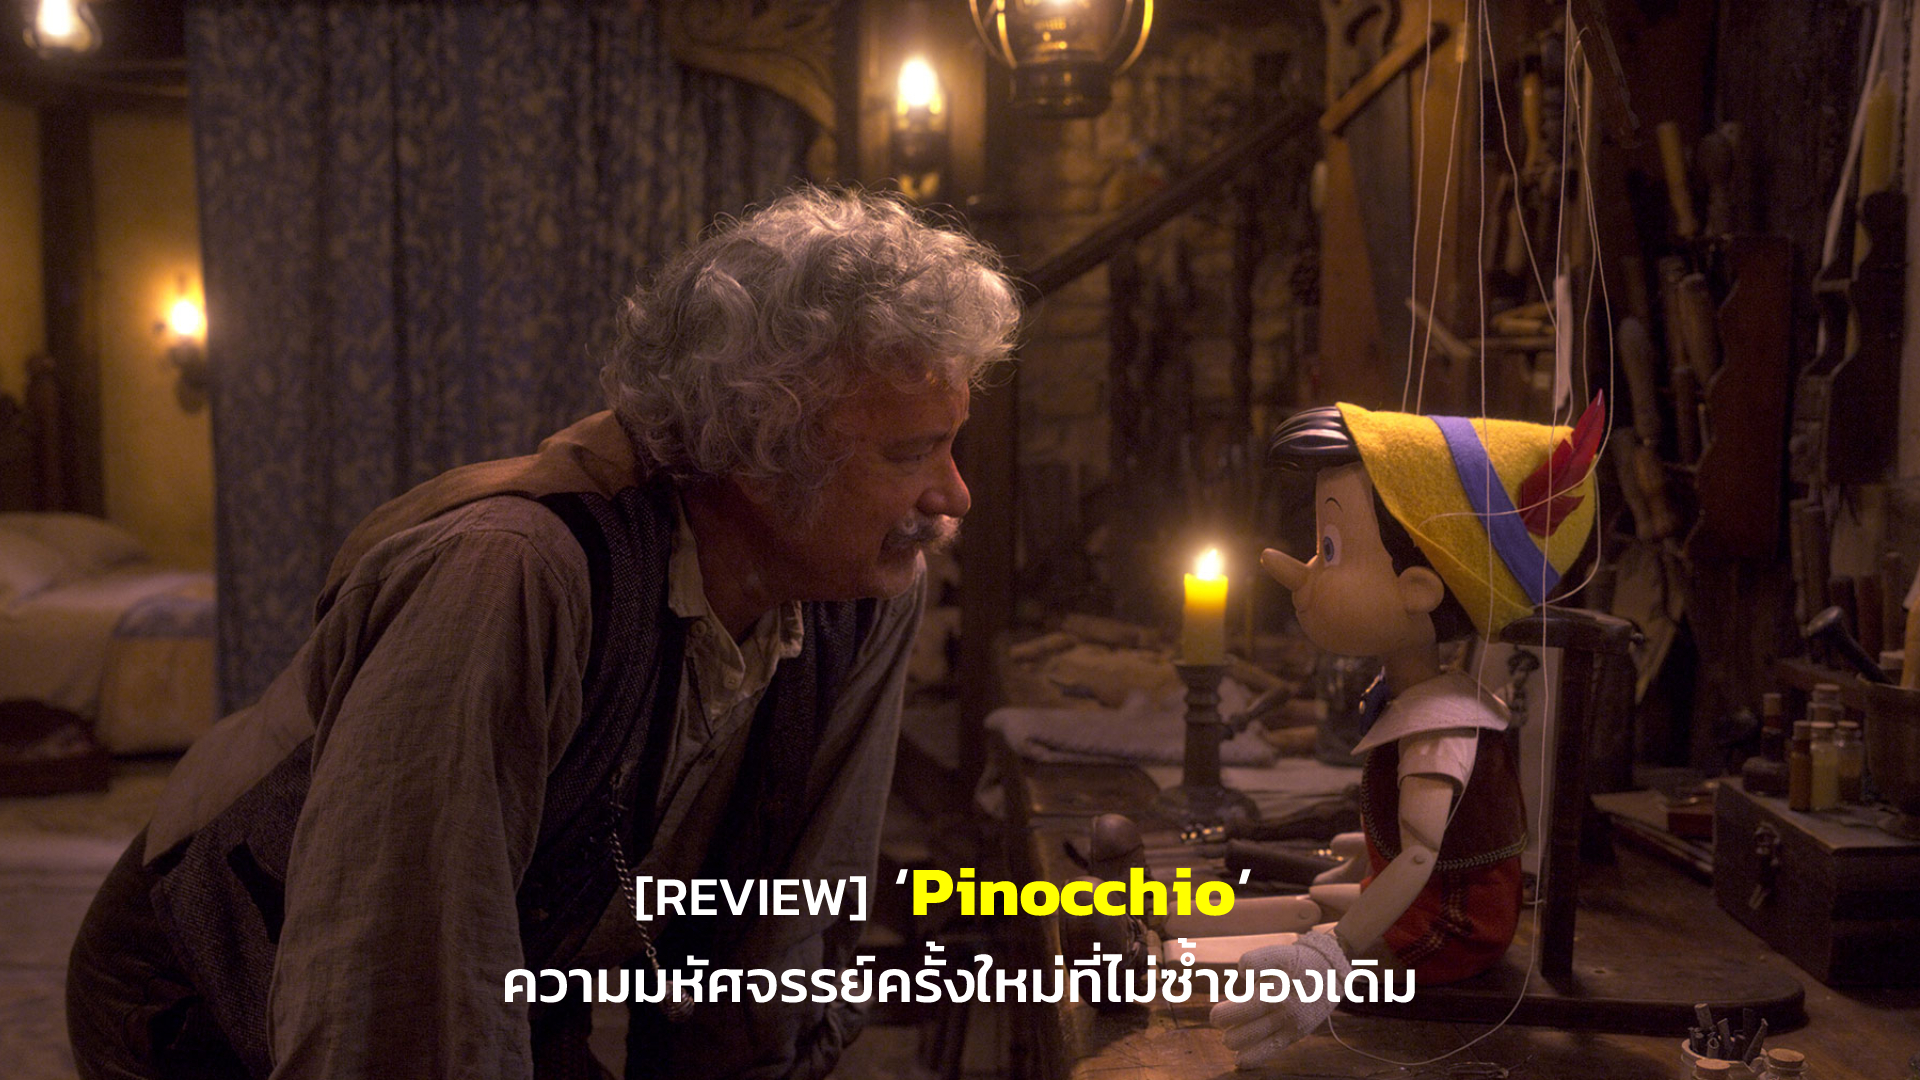 [REVIEW] ‘Pinocchio’ ความมหัศจรรย์ครั้งใหม่ที่ไม่ซ้ำของเดิม| GOSSIP GUN